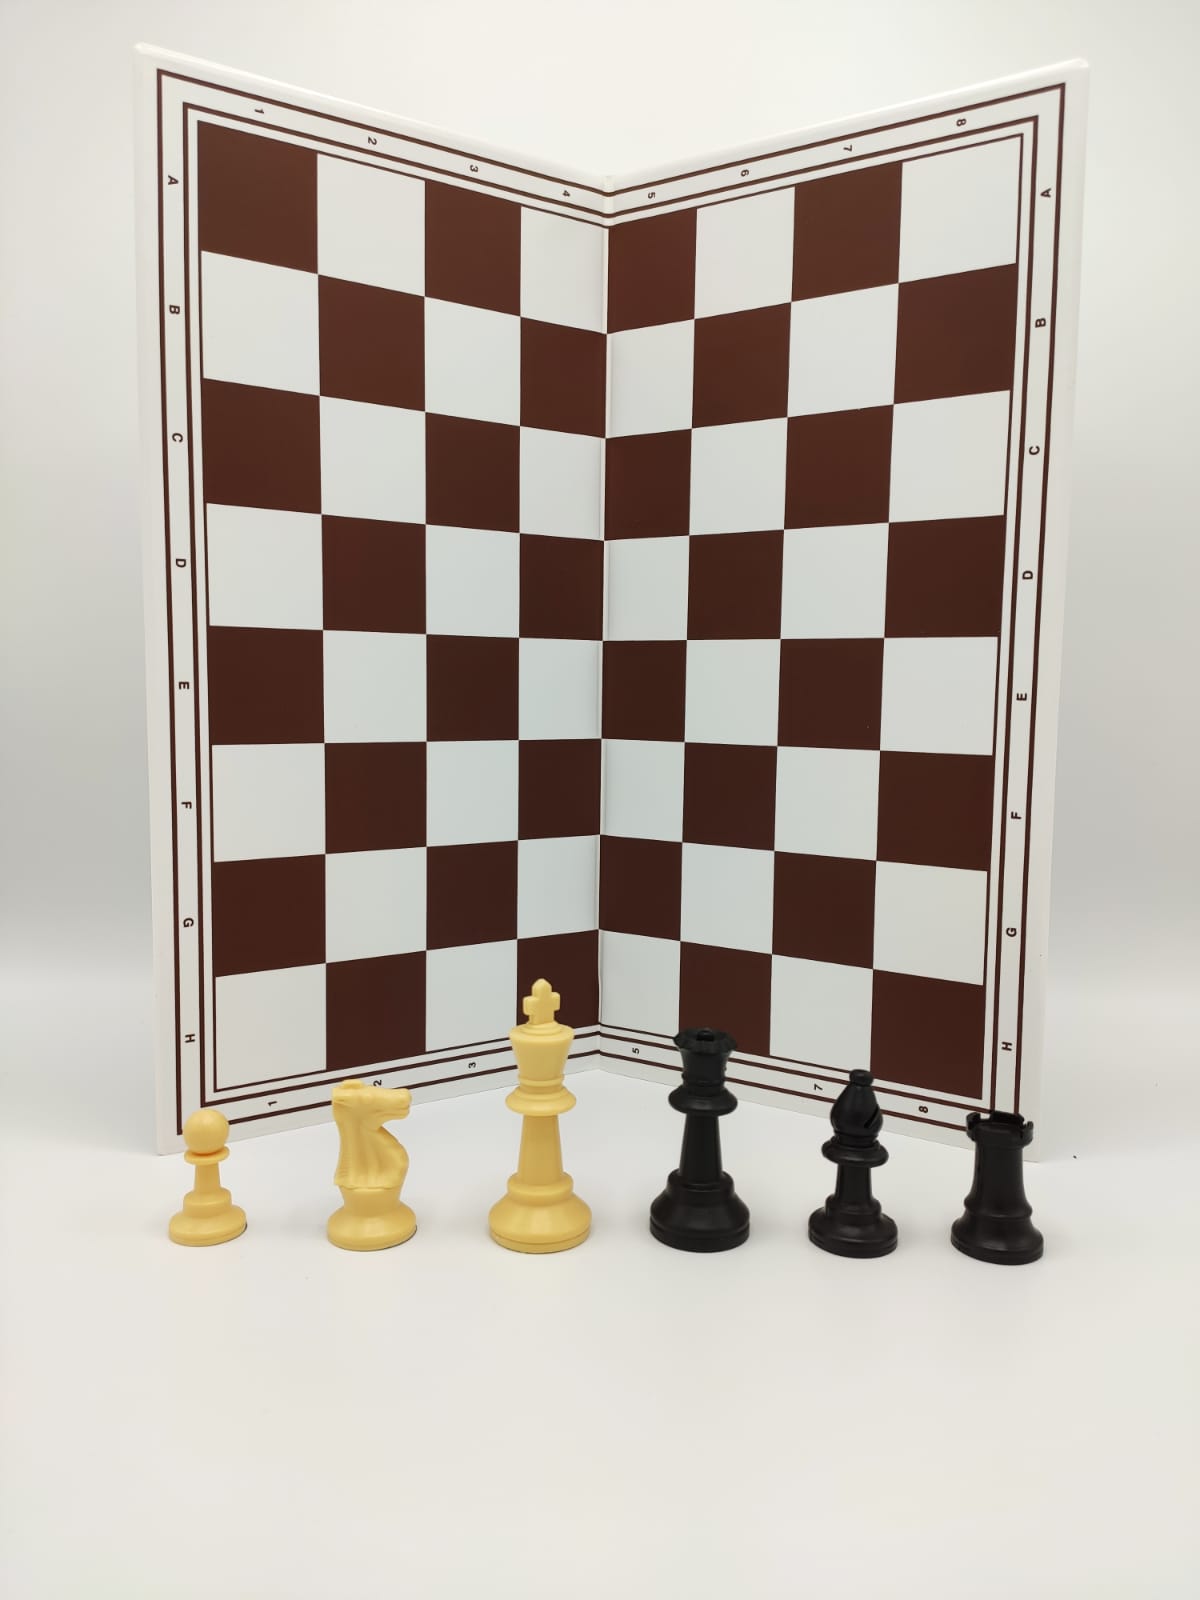 School Chess set